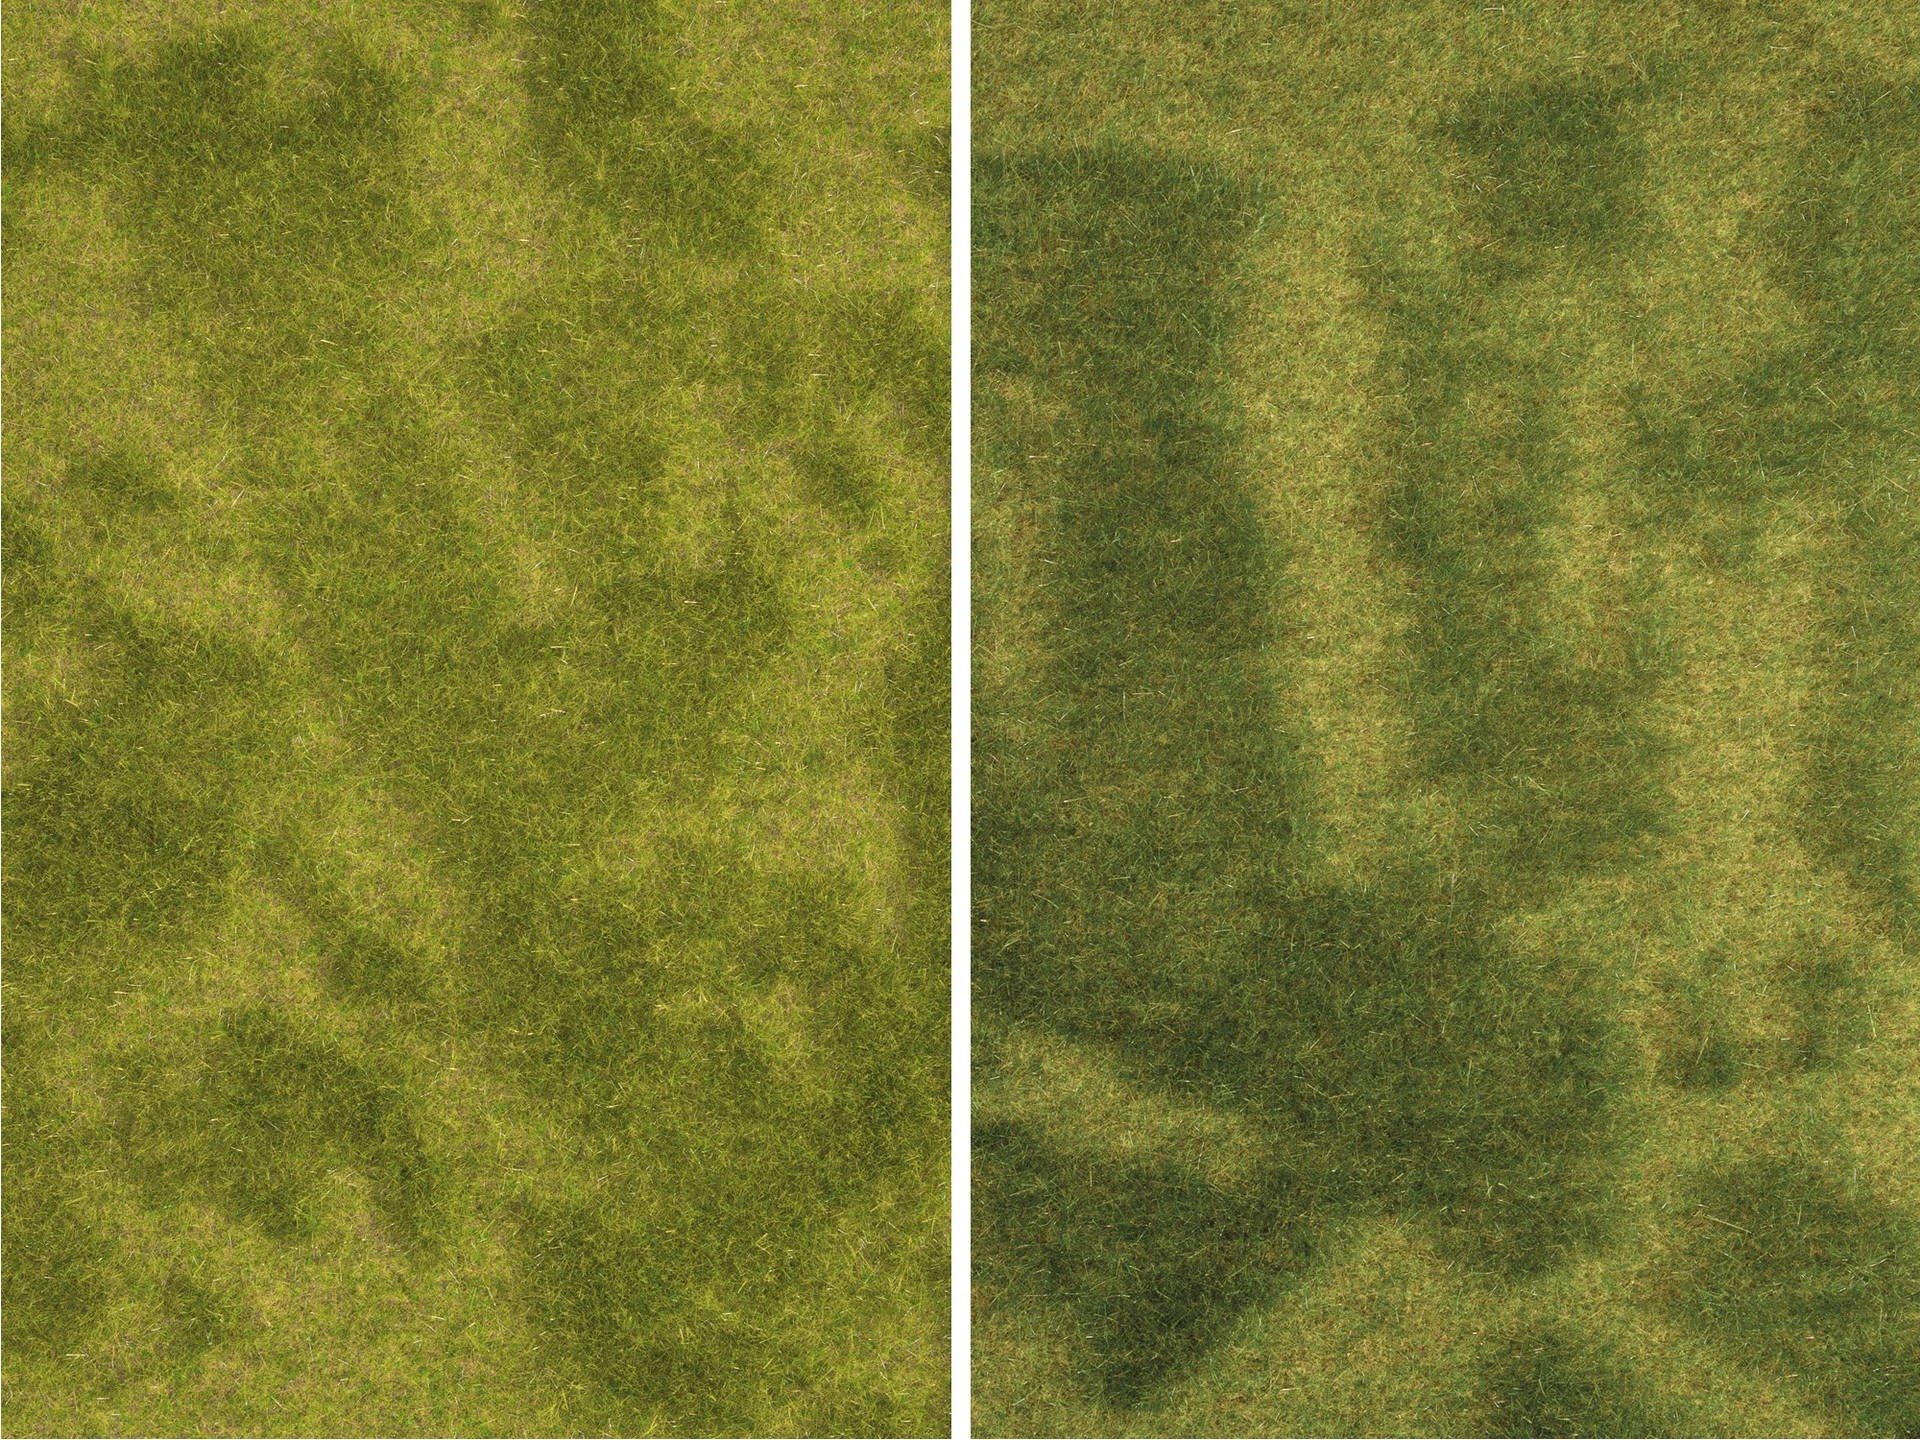 Noch - Natur+ Mini Tapete de Grama, "Reed Meadow" - Multi Escala: 07471